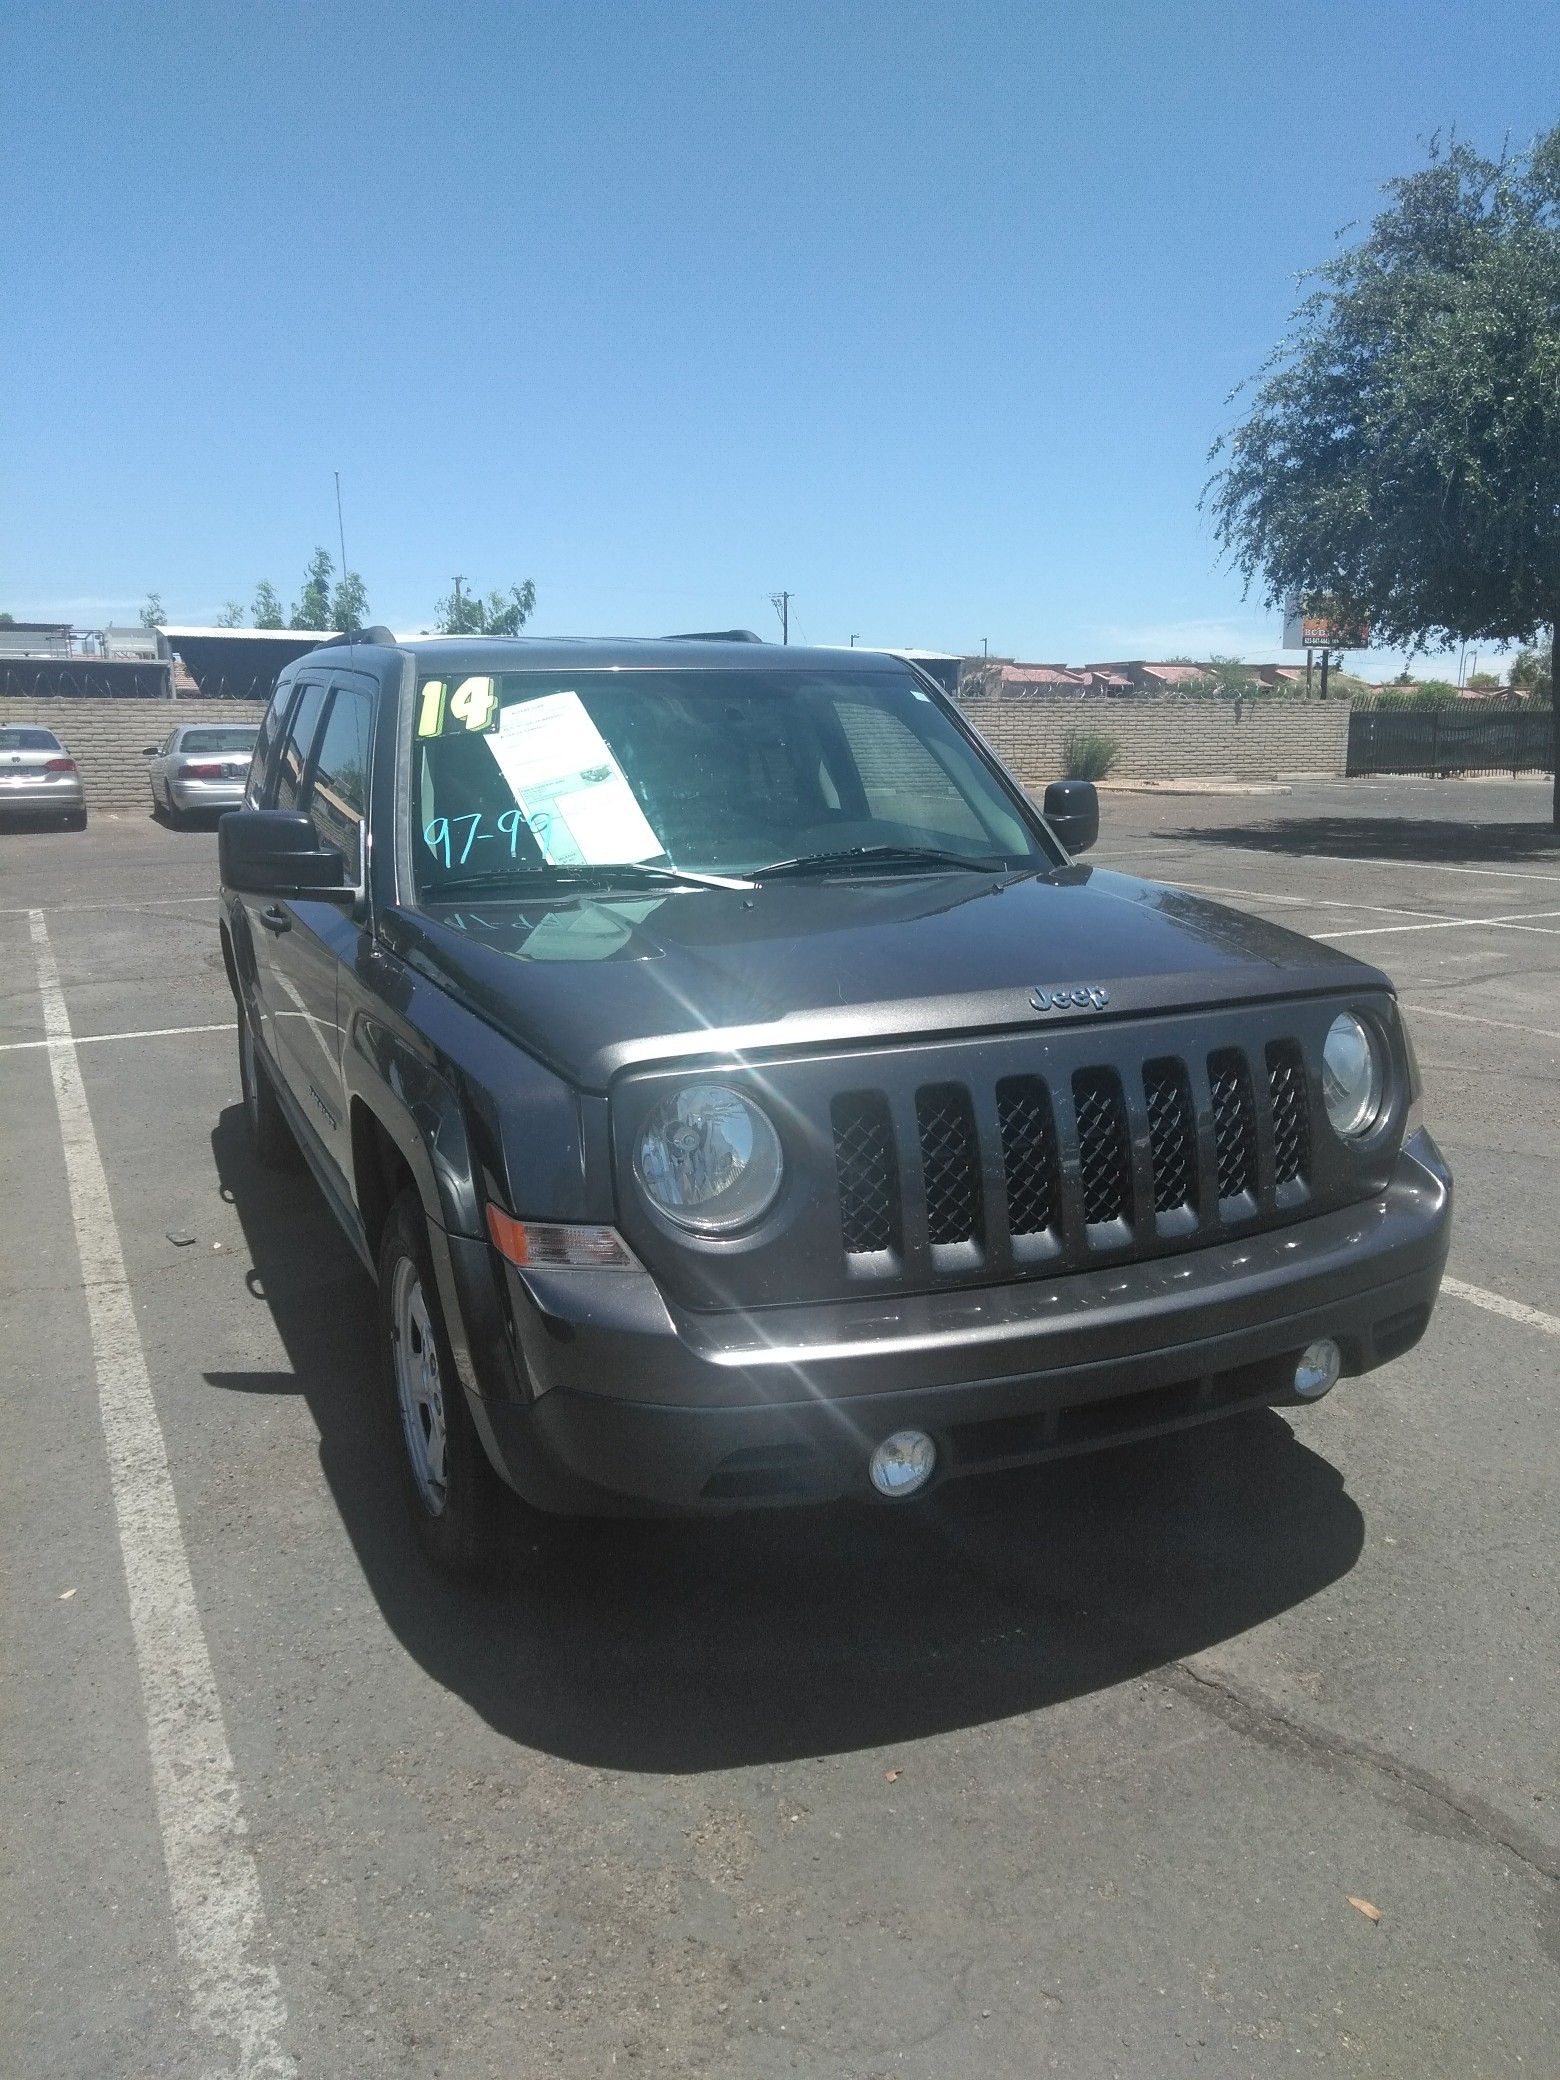 2014 jeep patriot 4x4 manual 🗺 starting at $799 down payment 🗺 everyone is approved 🗺 aqui su amigo jesus les ayuda